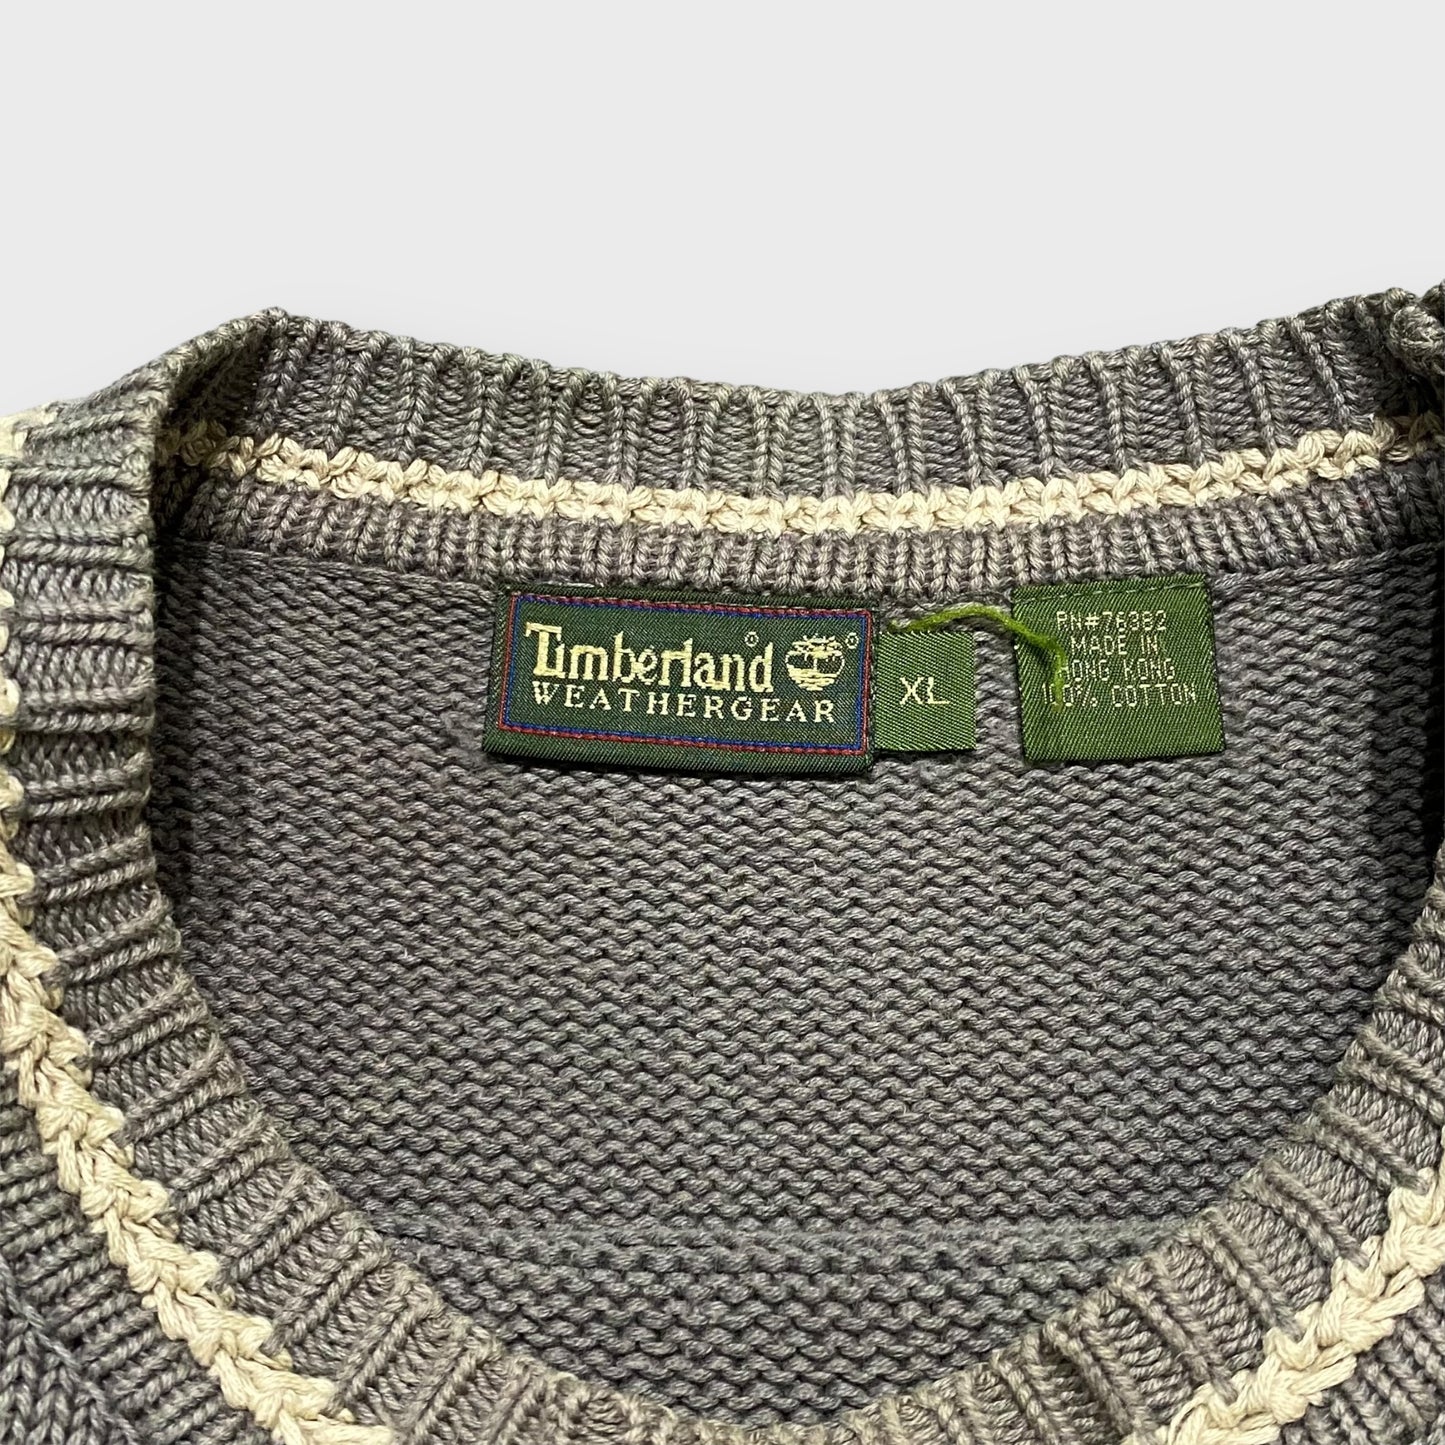 "Timberland" Logo design knit sweater